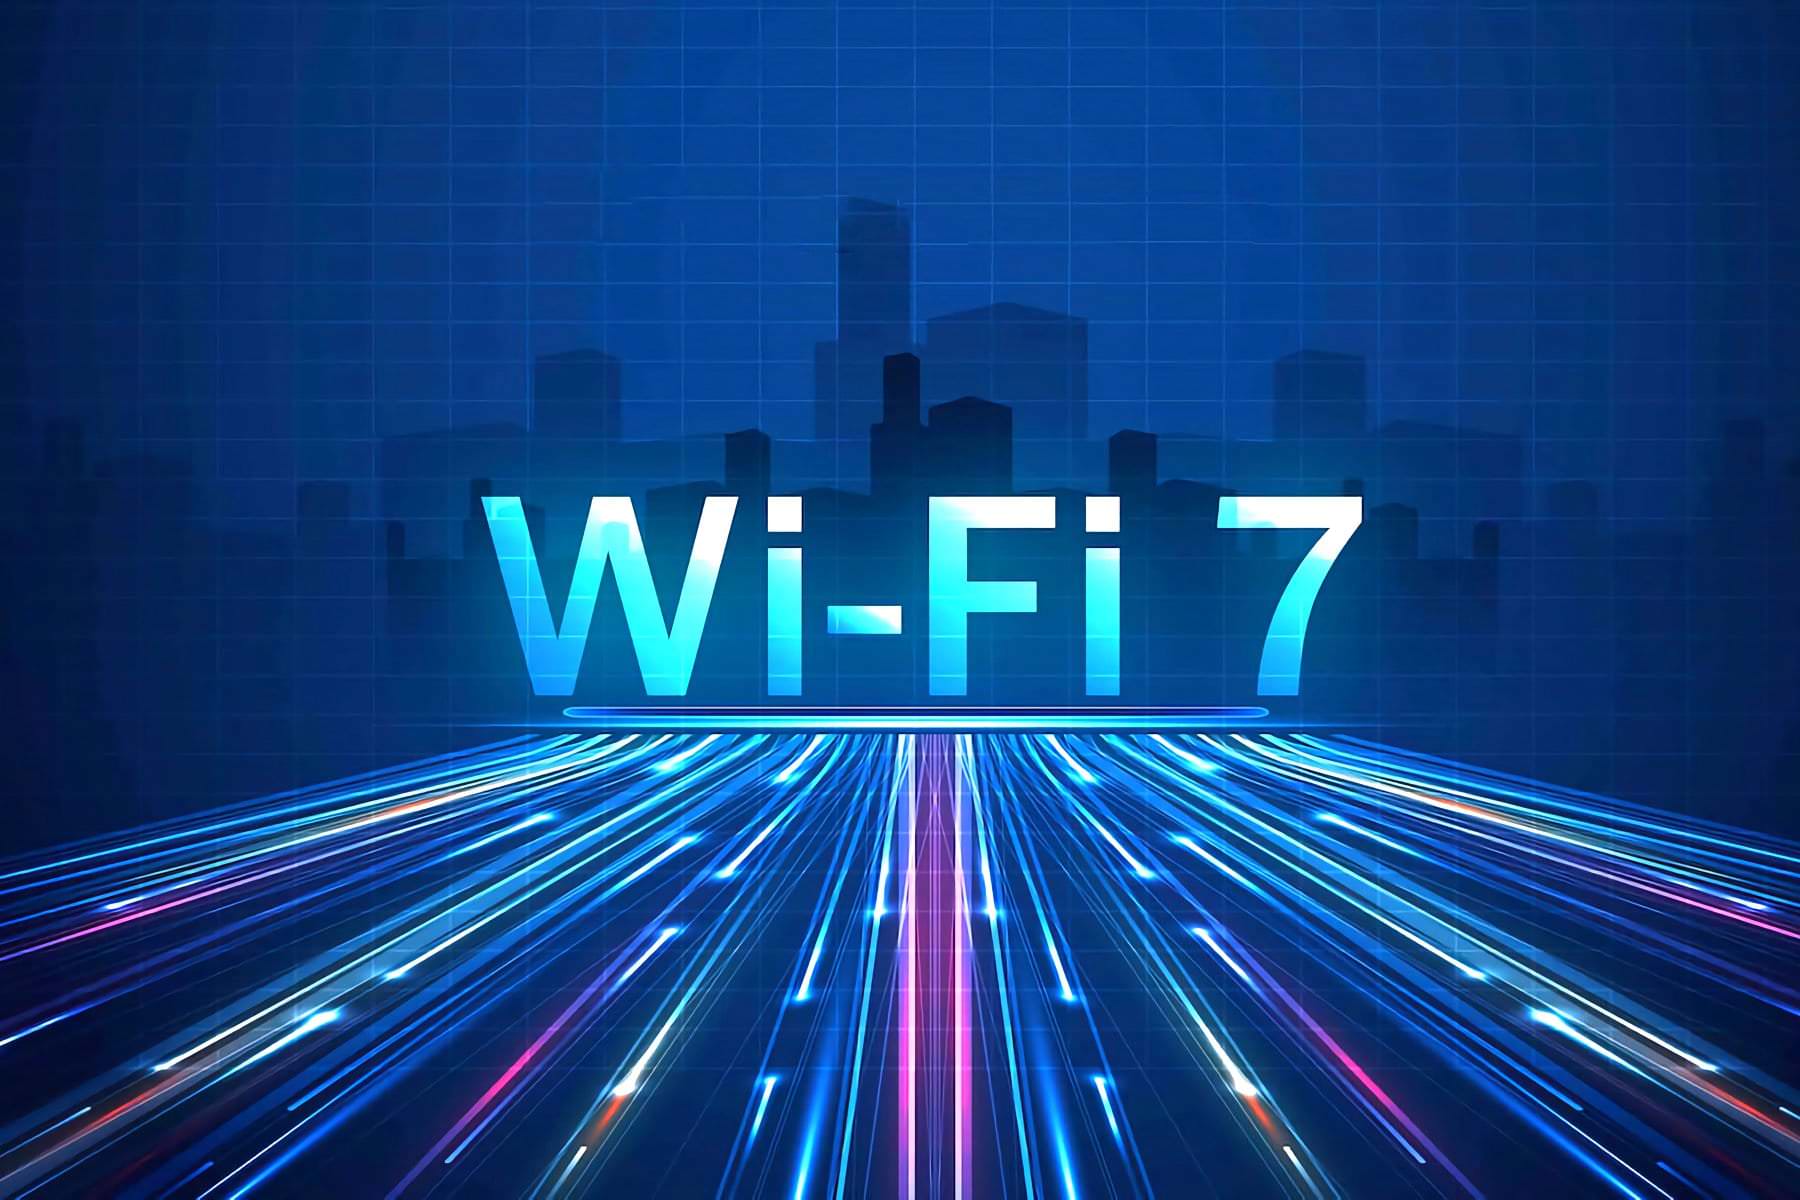 Представлен стандарт Wi-Fi 7. Скоро он появится во всех смартфонах и компьютерах